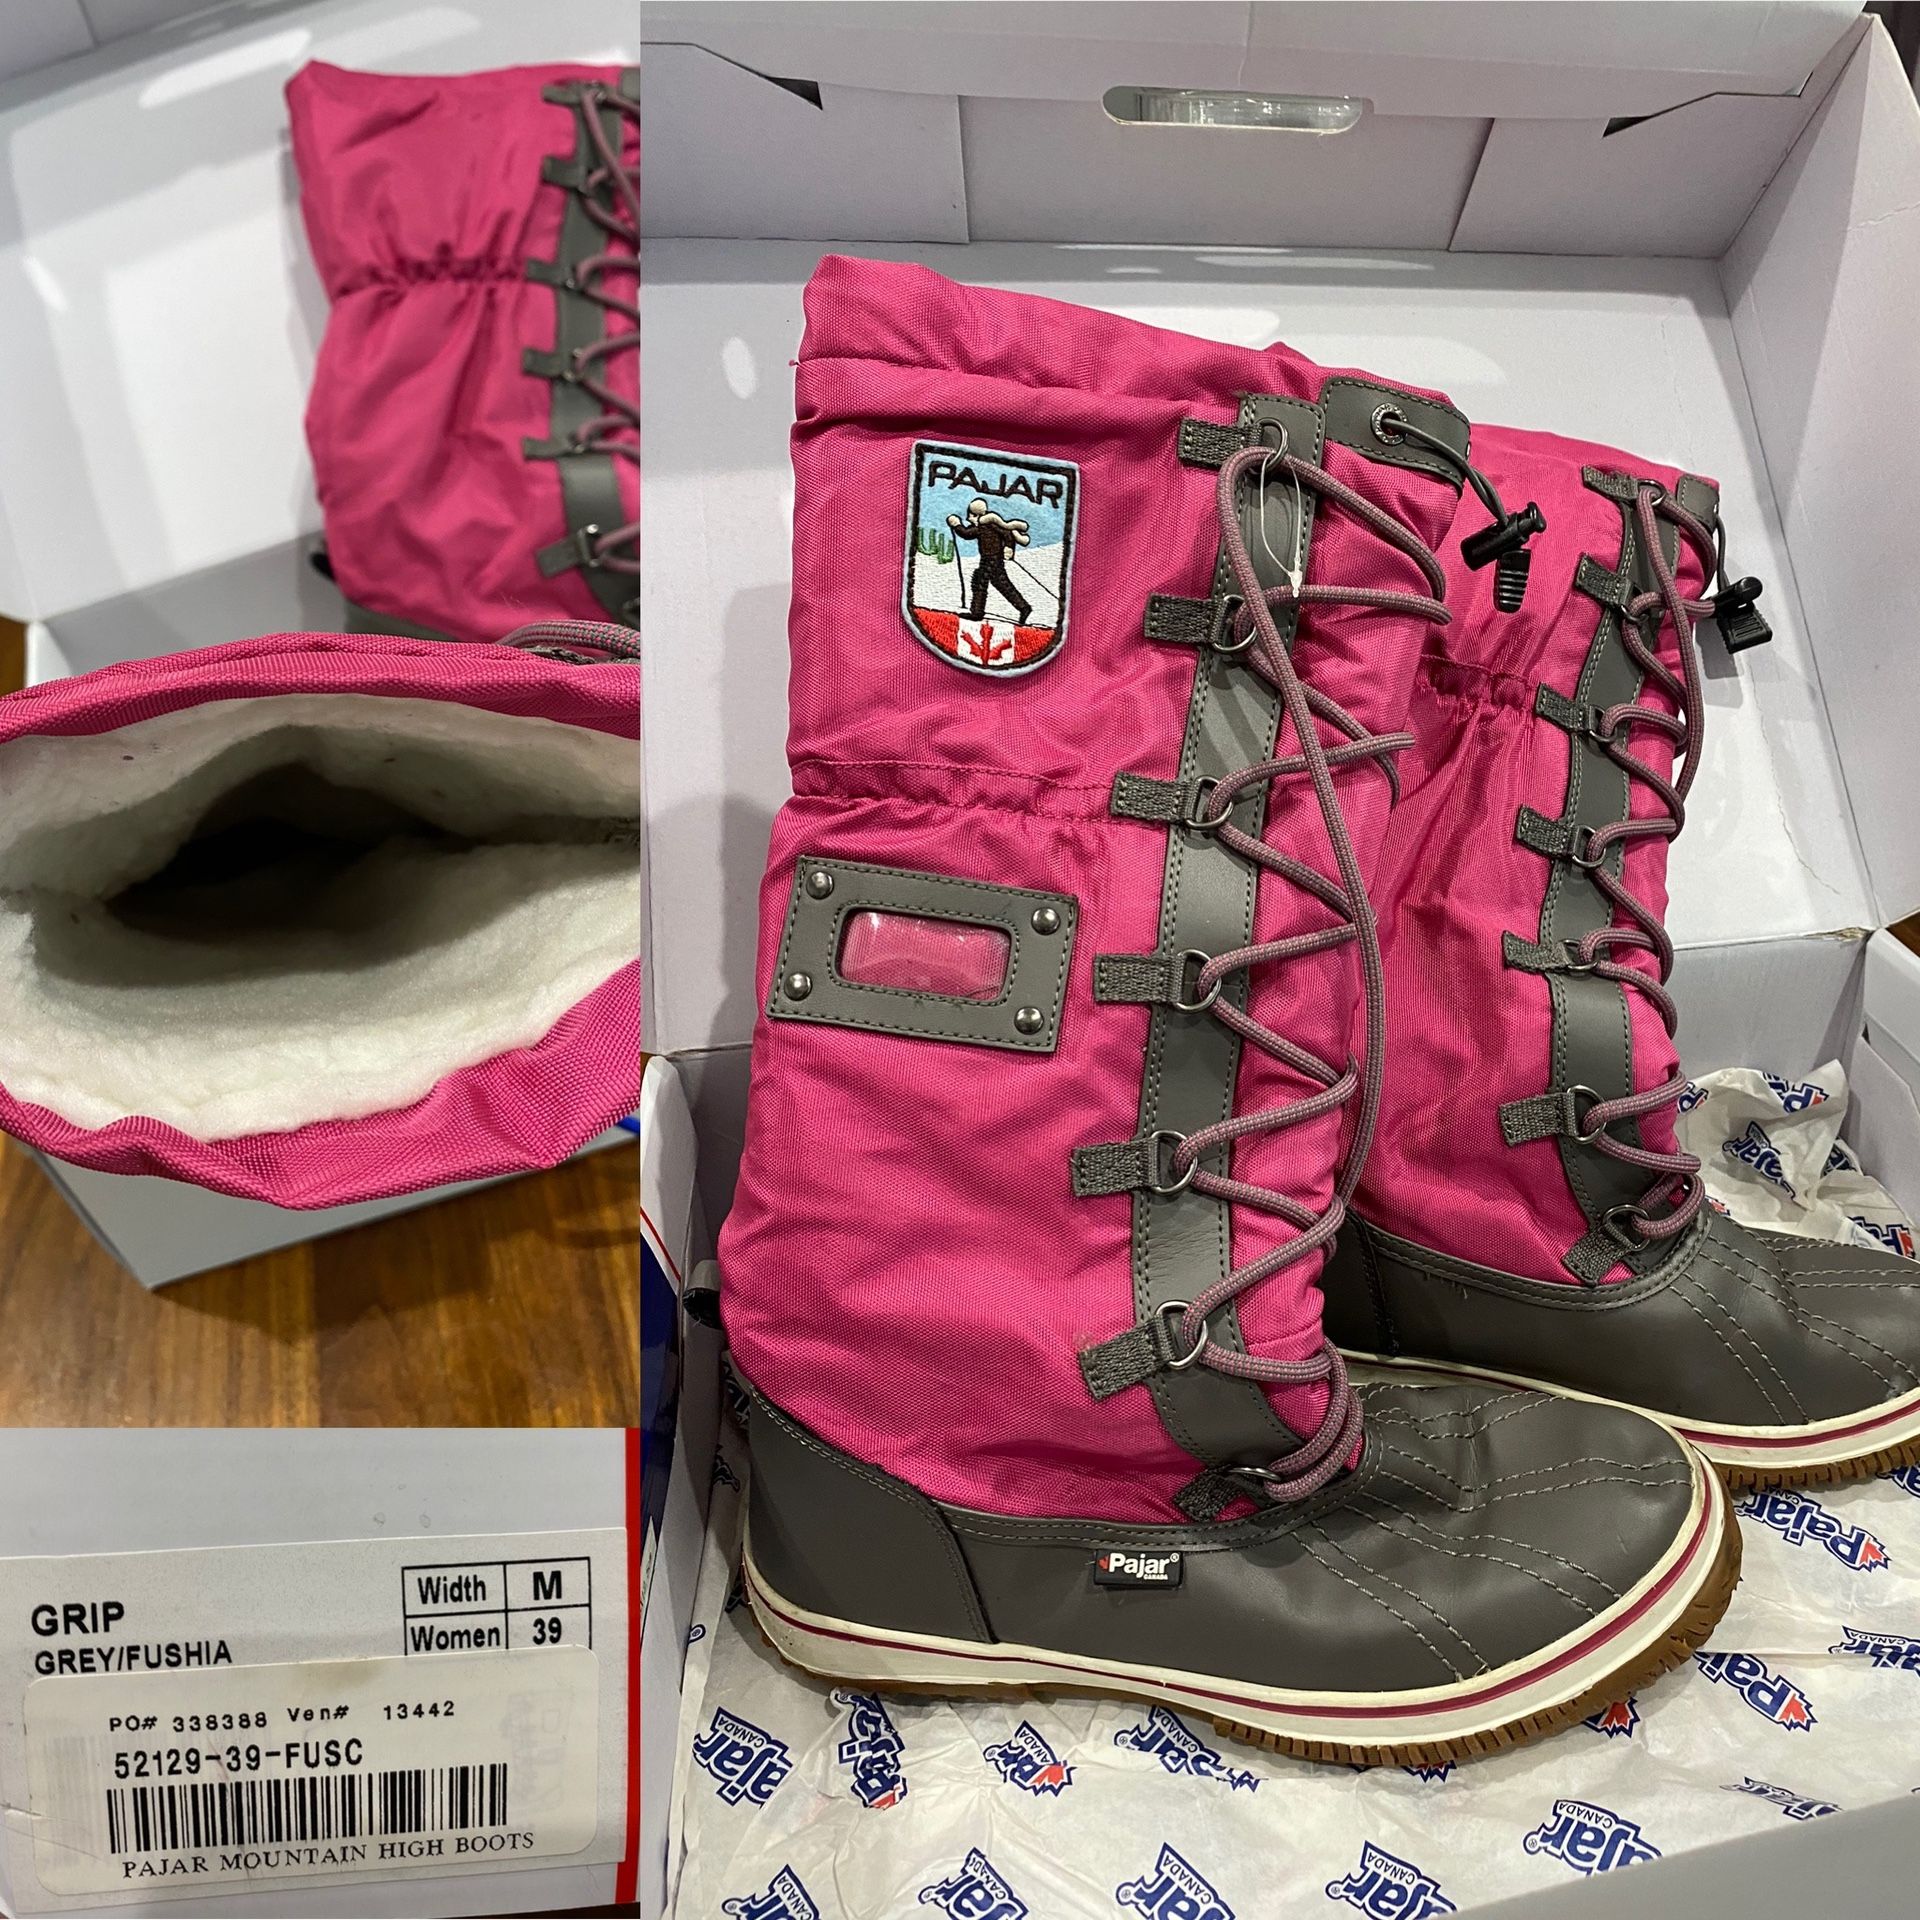 Pajar Winter Boots - Women size 9